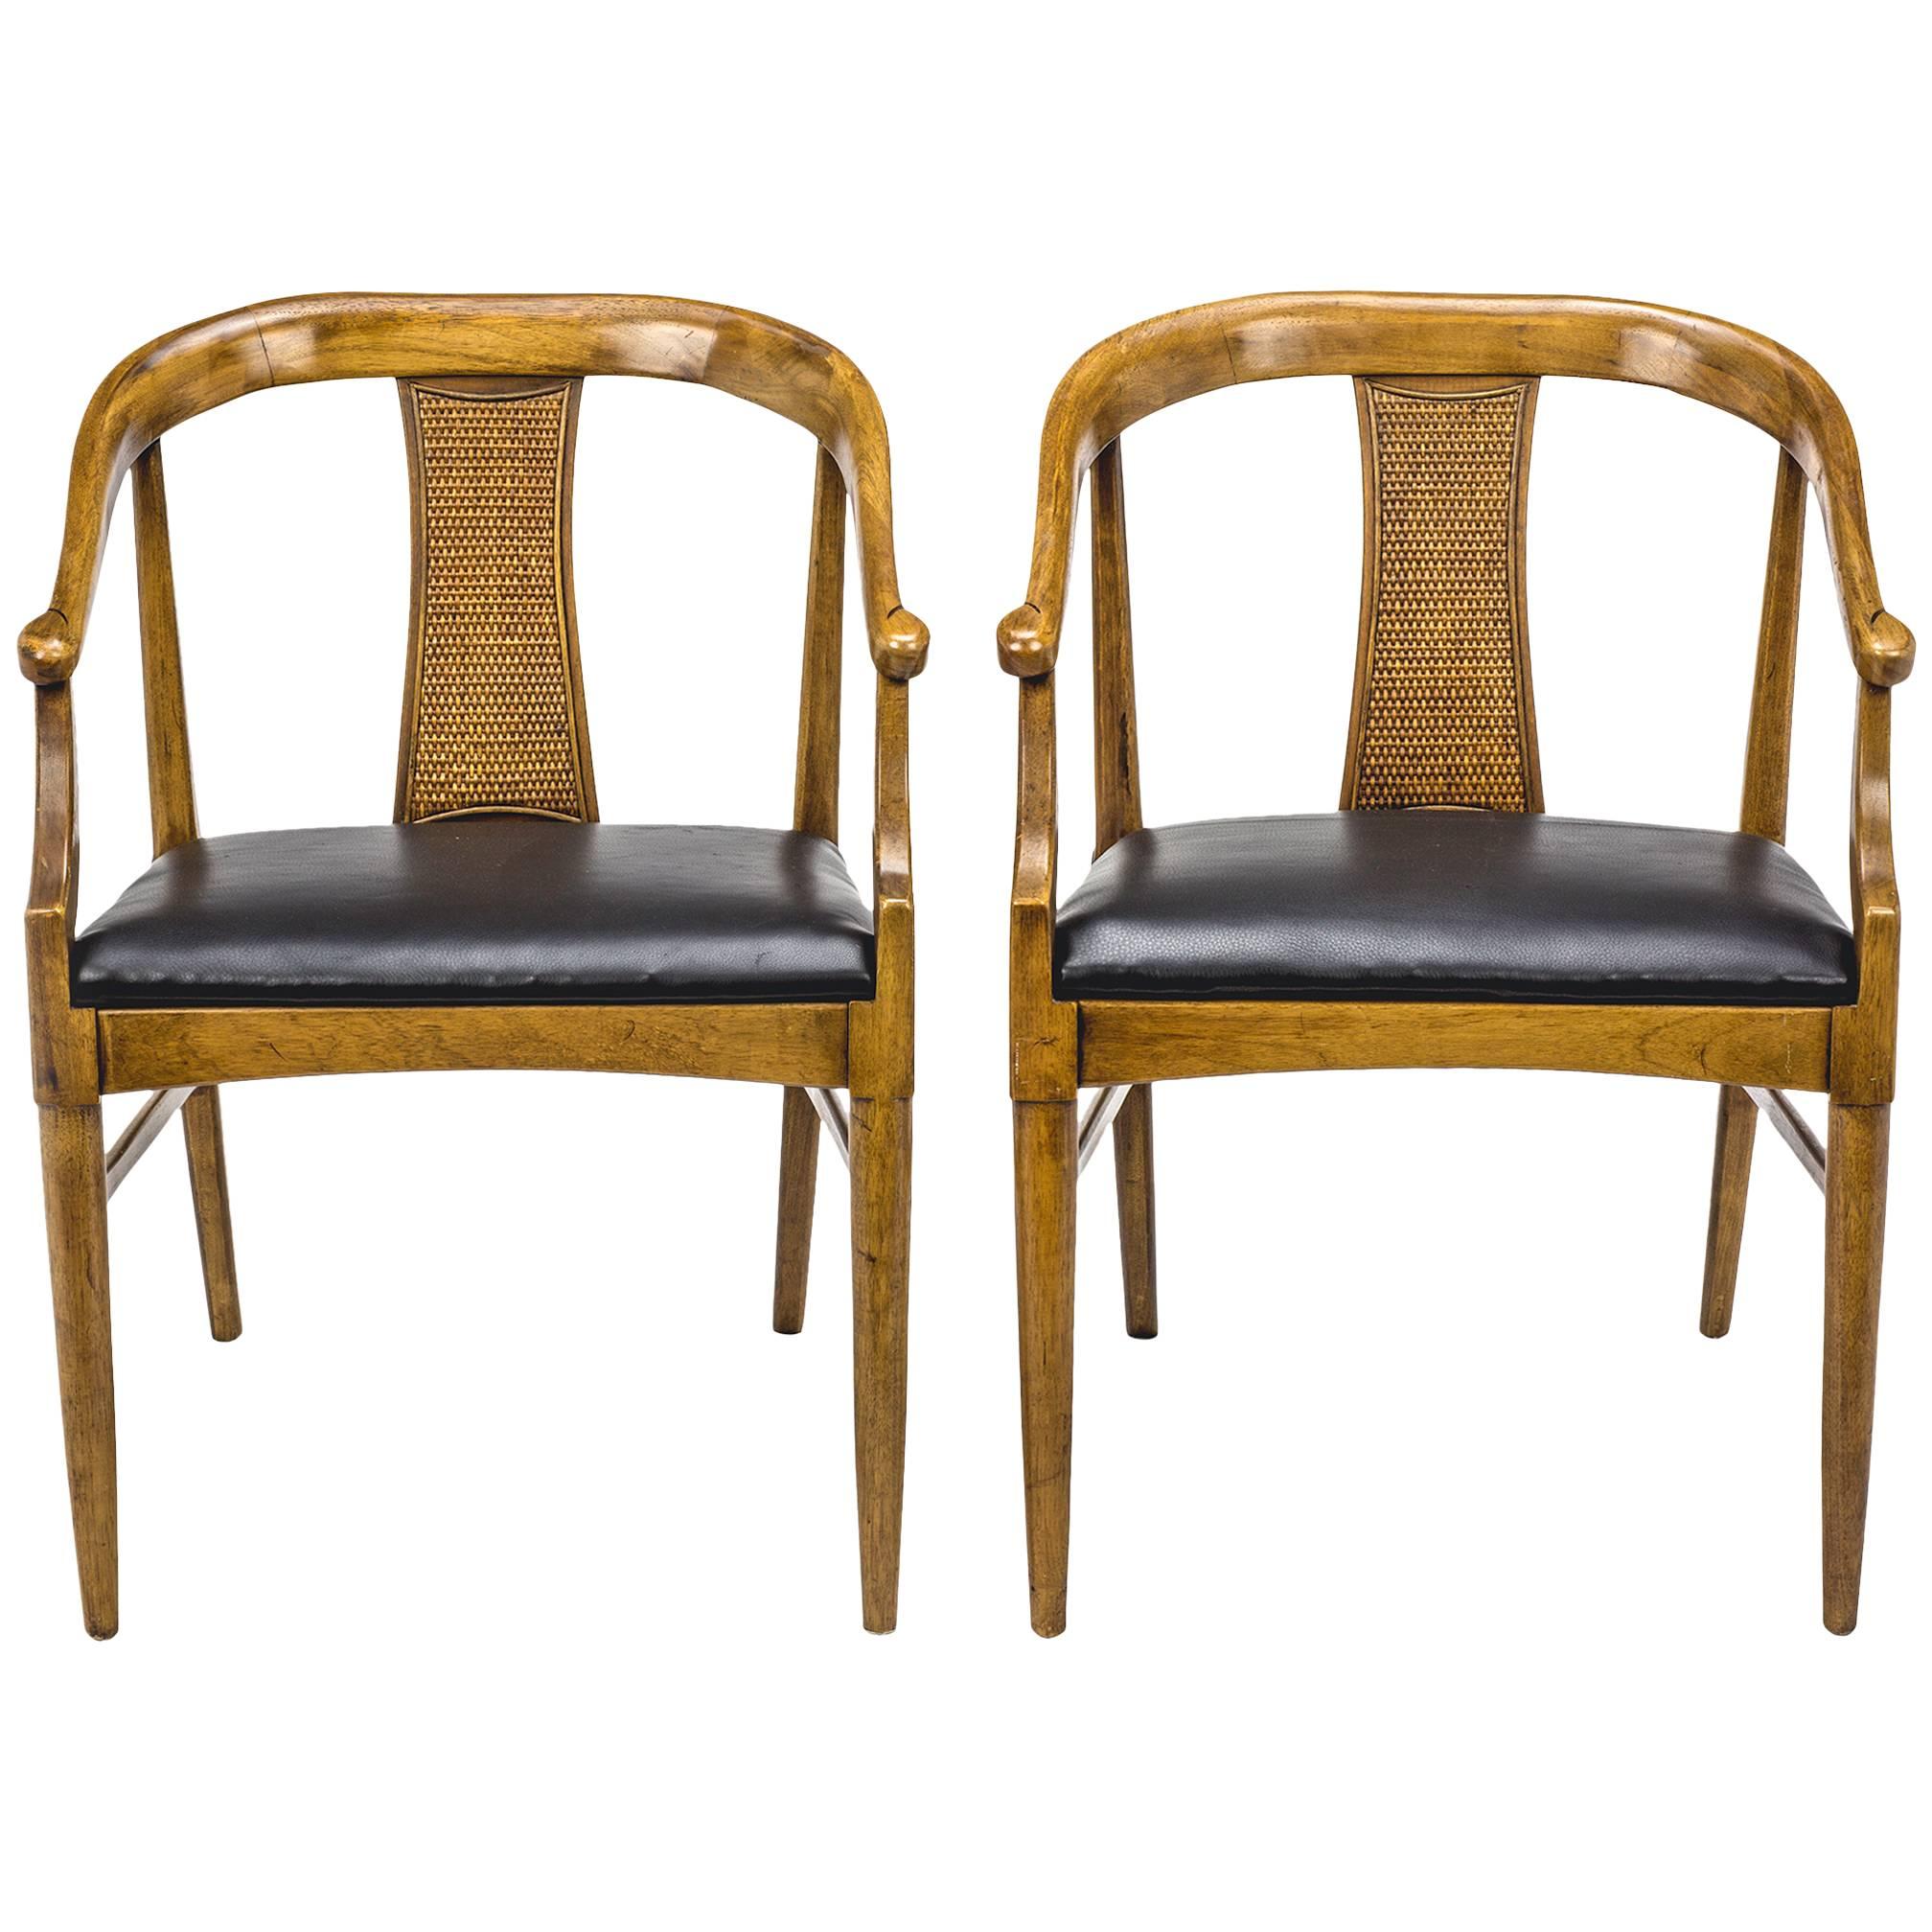  Leather Chairs, Mid Century Danish.  Pair